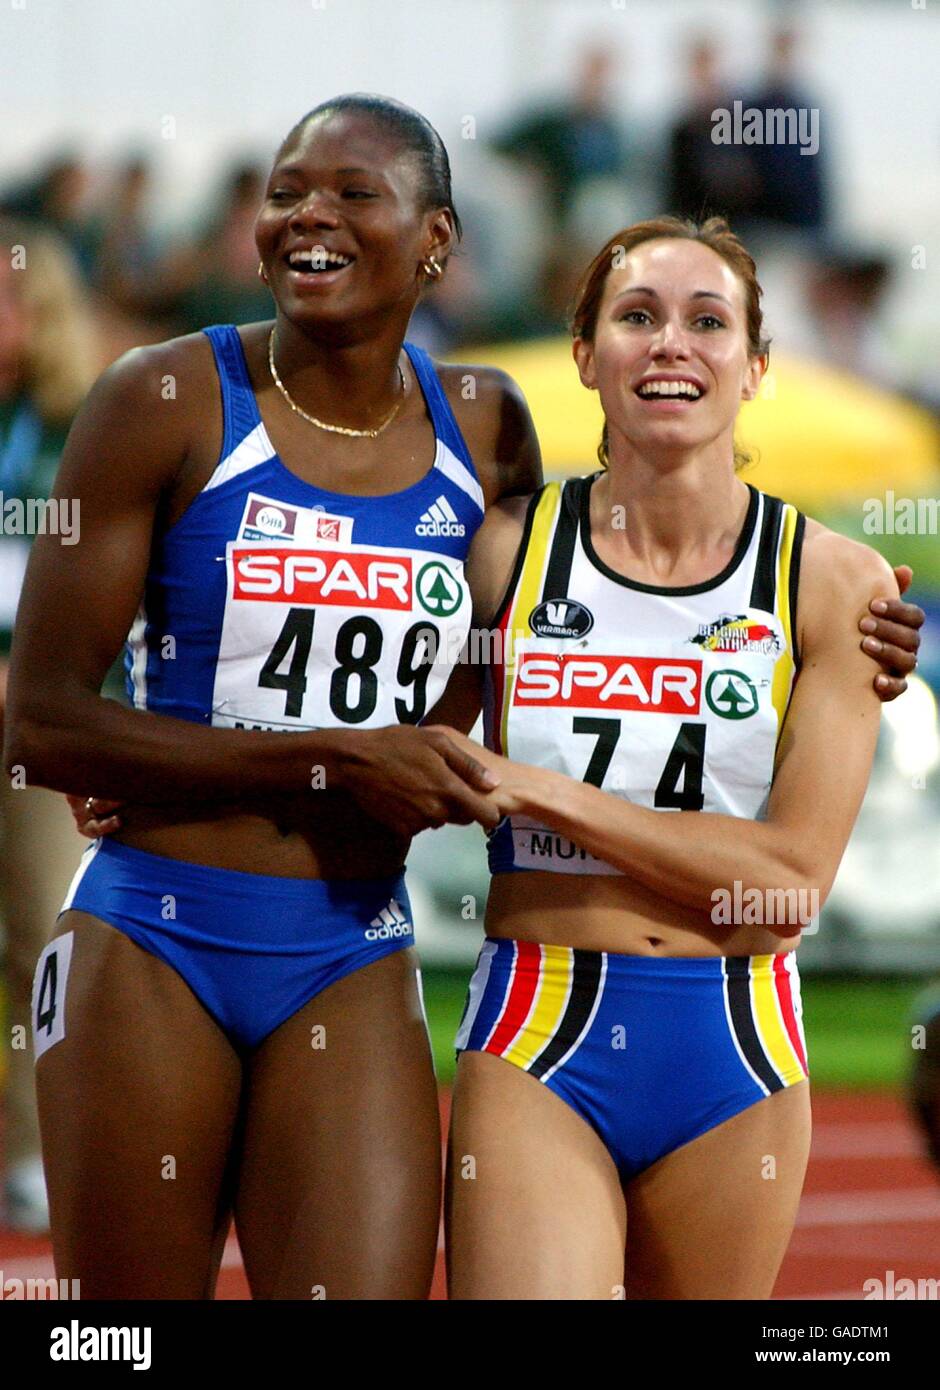 Athletics - European Athletics Championships - Munich 2002 - Women's 200m Final Stock Photo